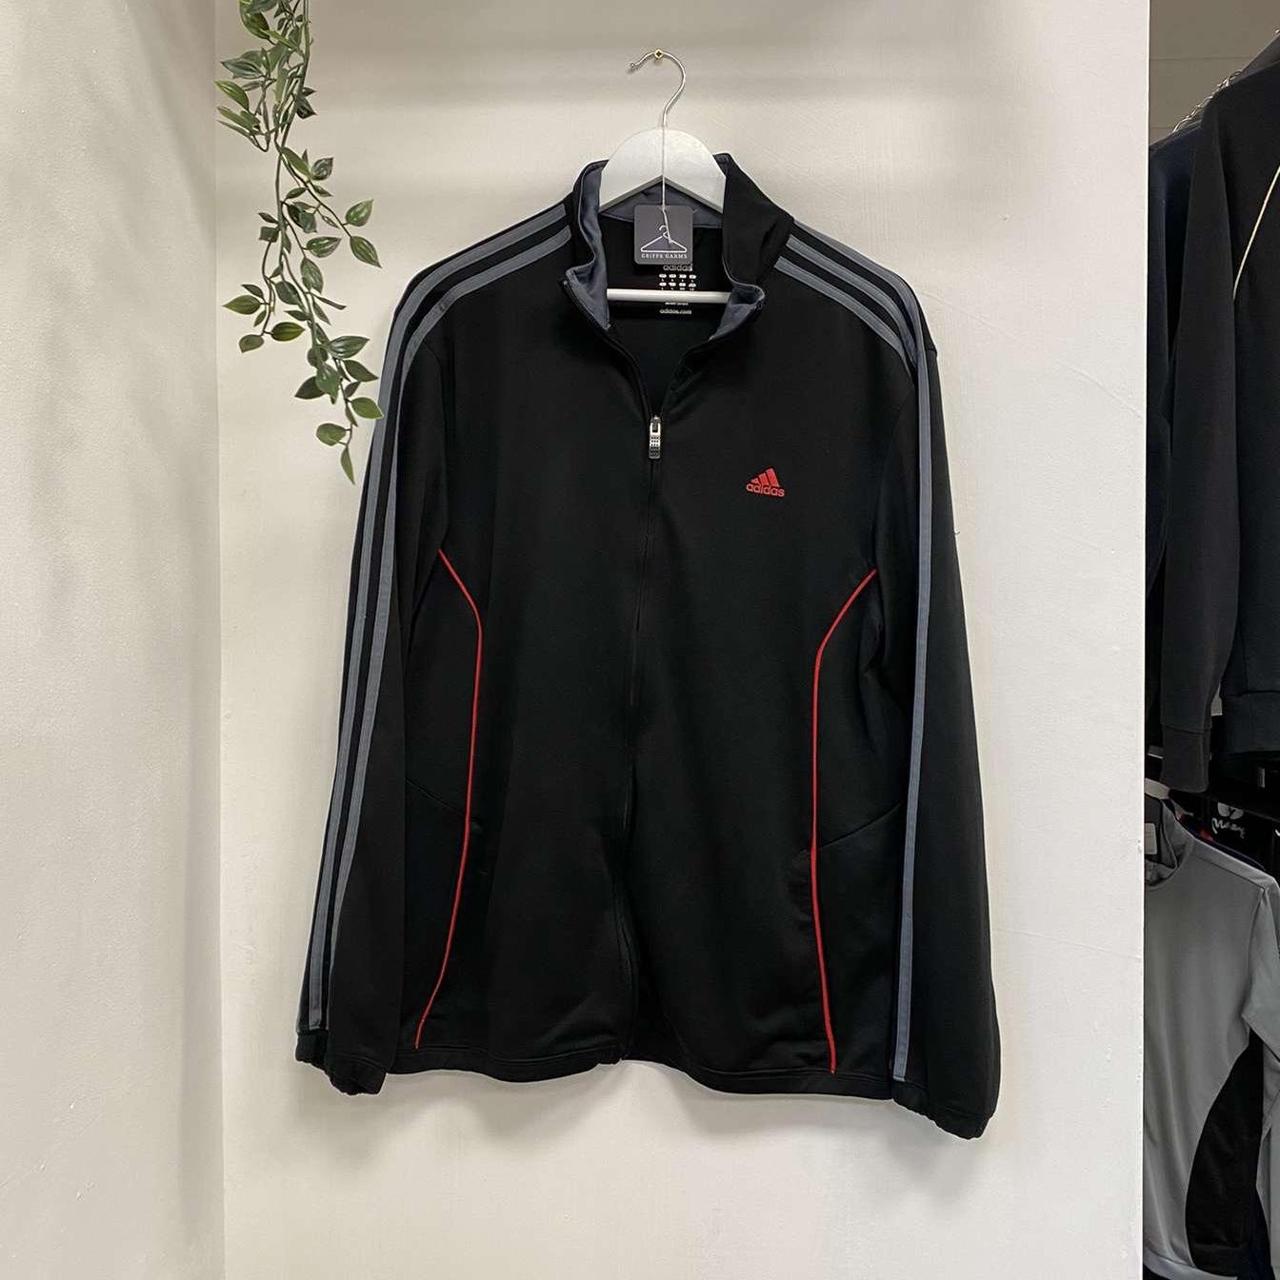 Adidas Men's Red and Black Jacket | Depop